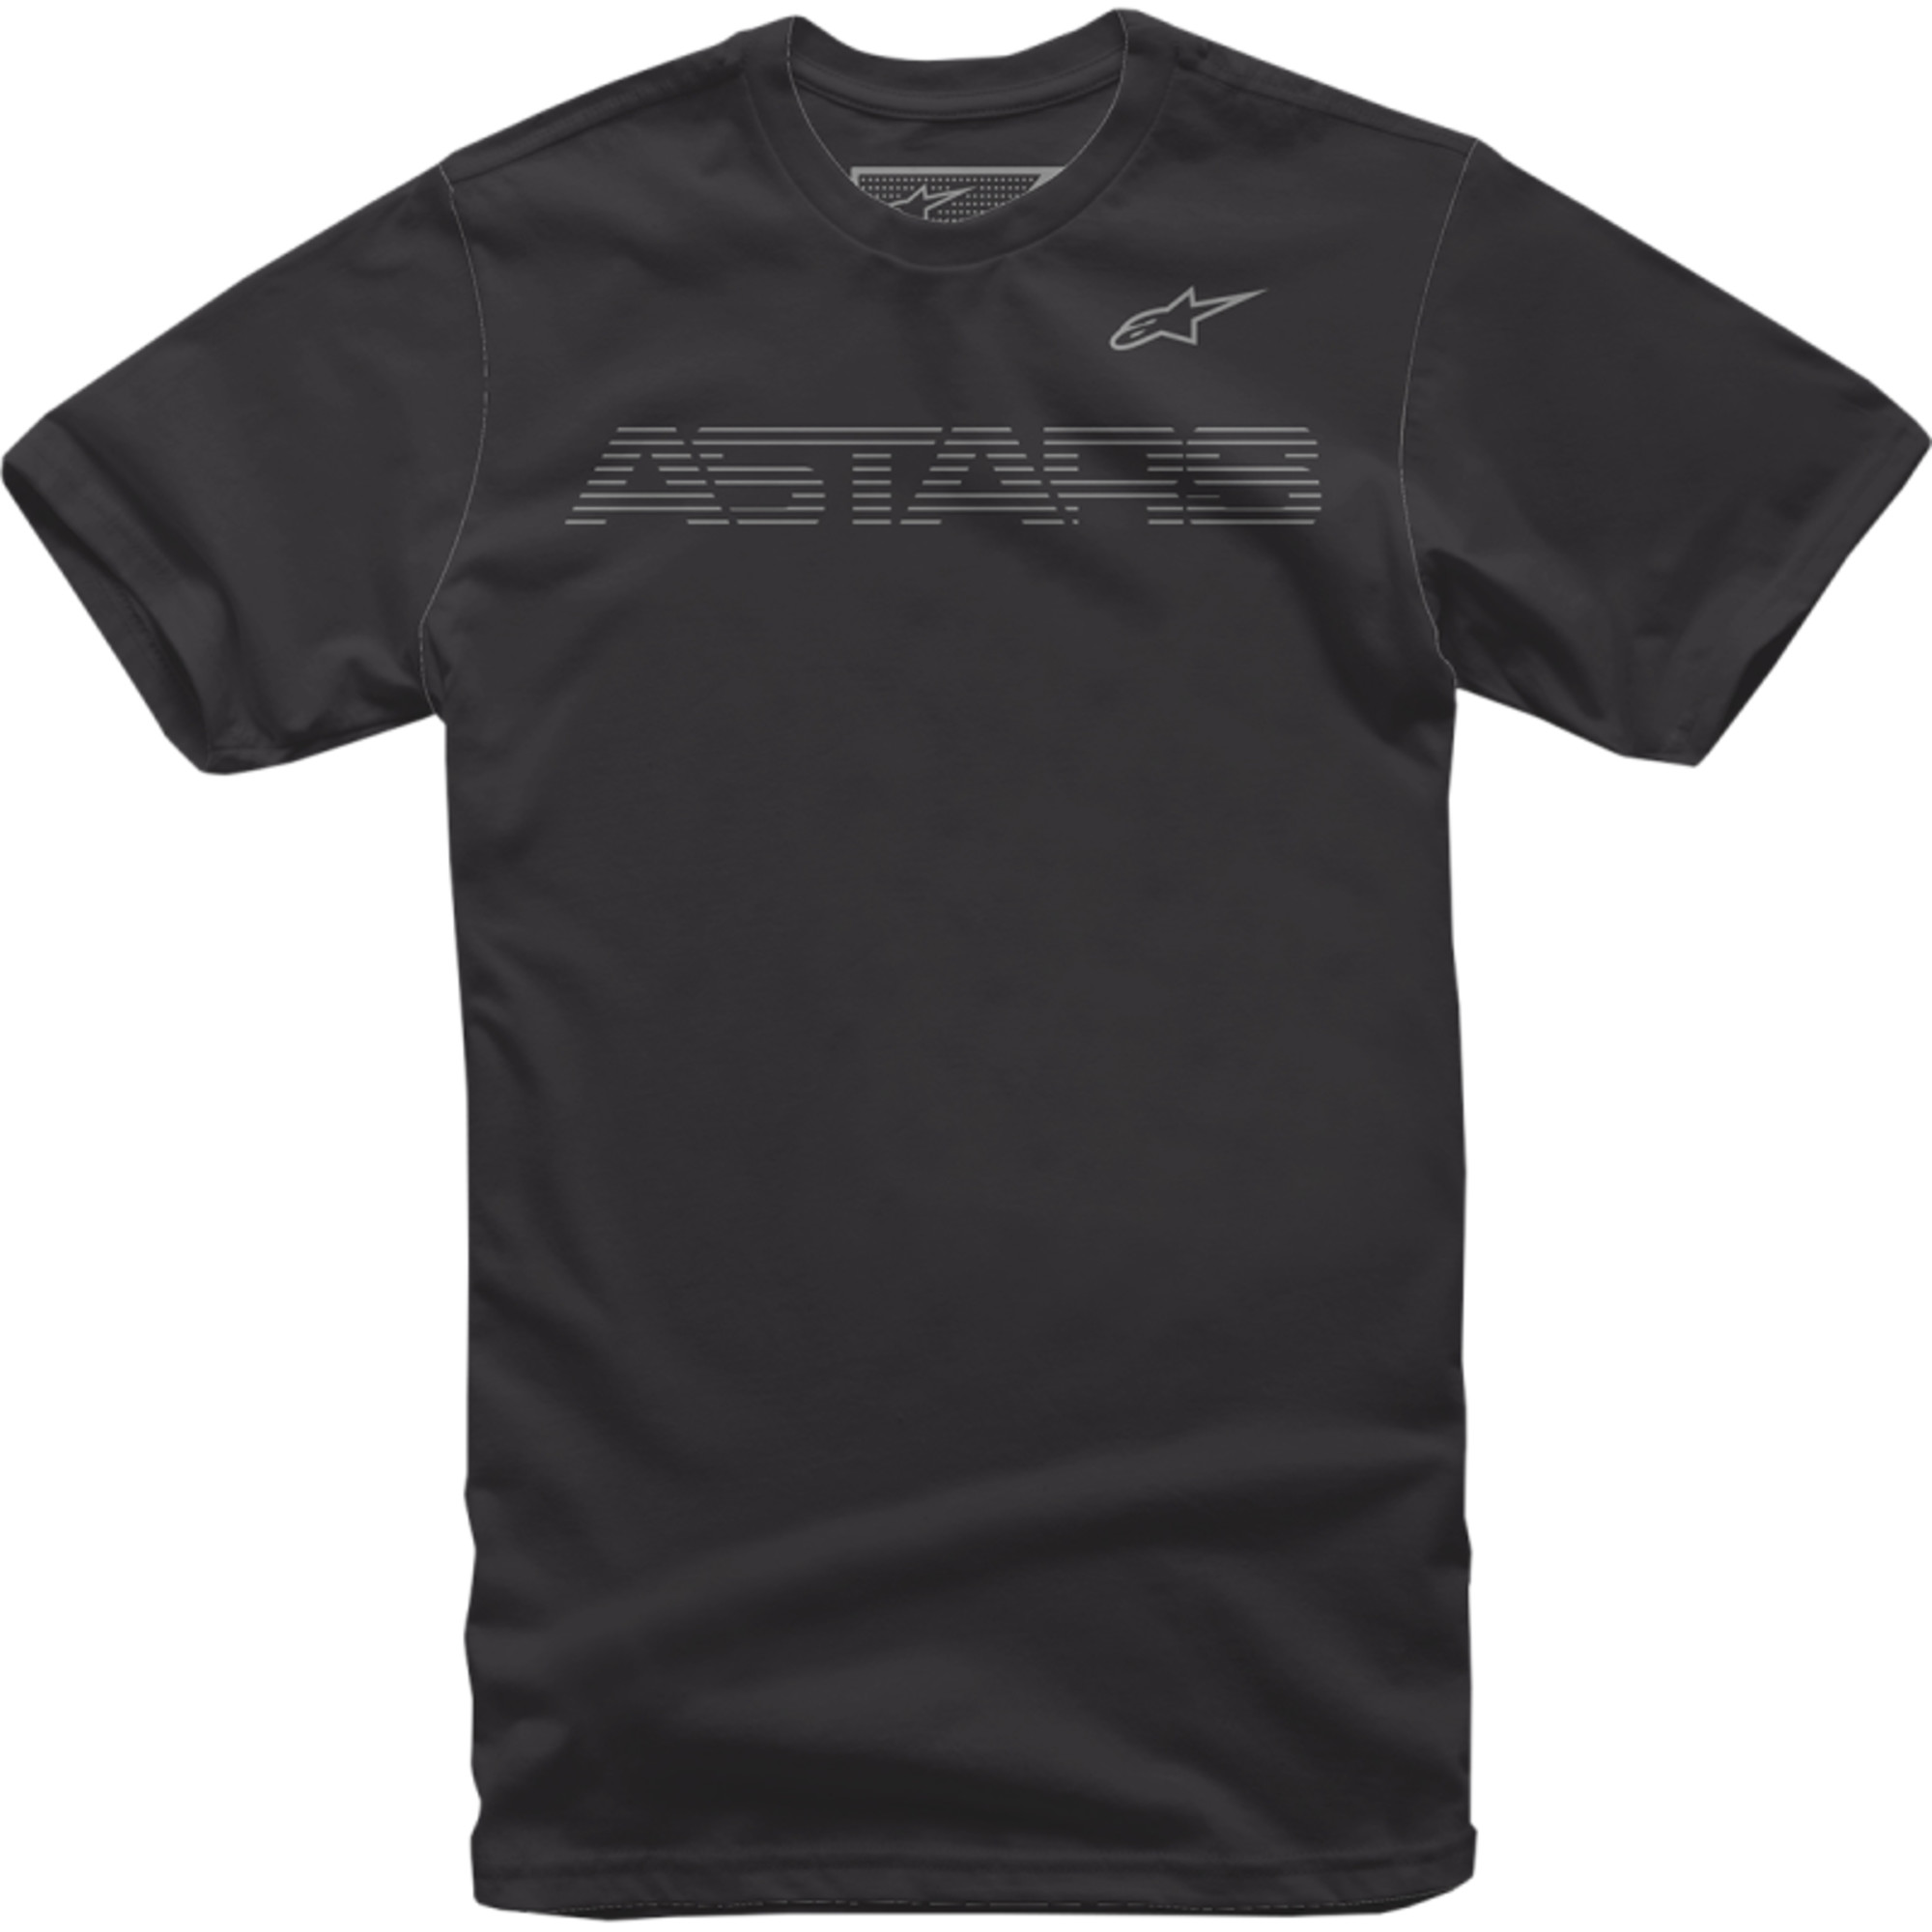 alpinestars t-shirt shirts for men reveal